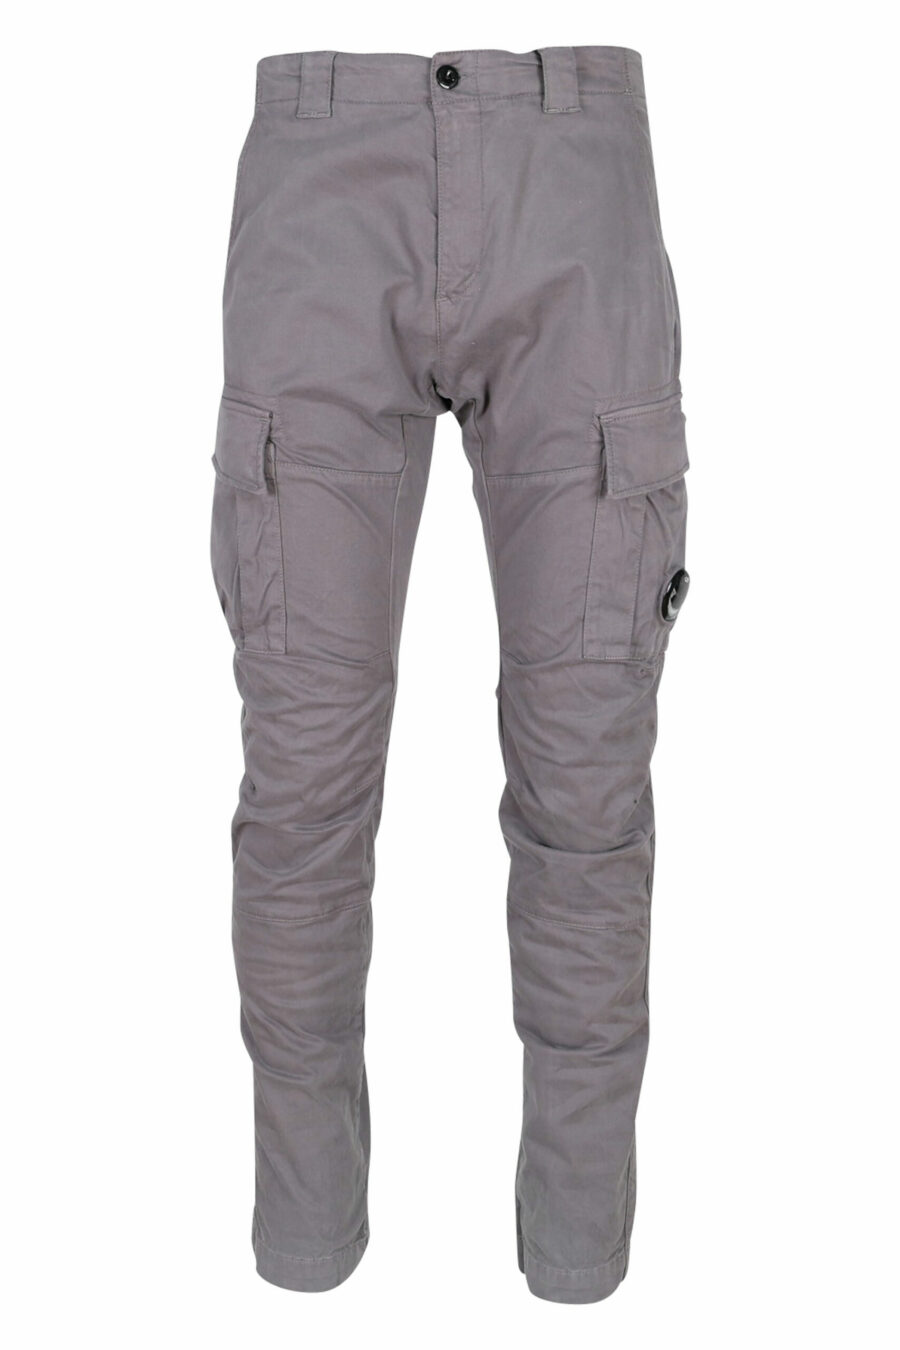 Pantalón gris marengo estilo cargo de satén elástico y logo lente - 7620943597400 scaled